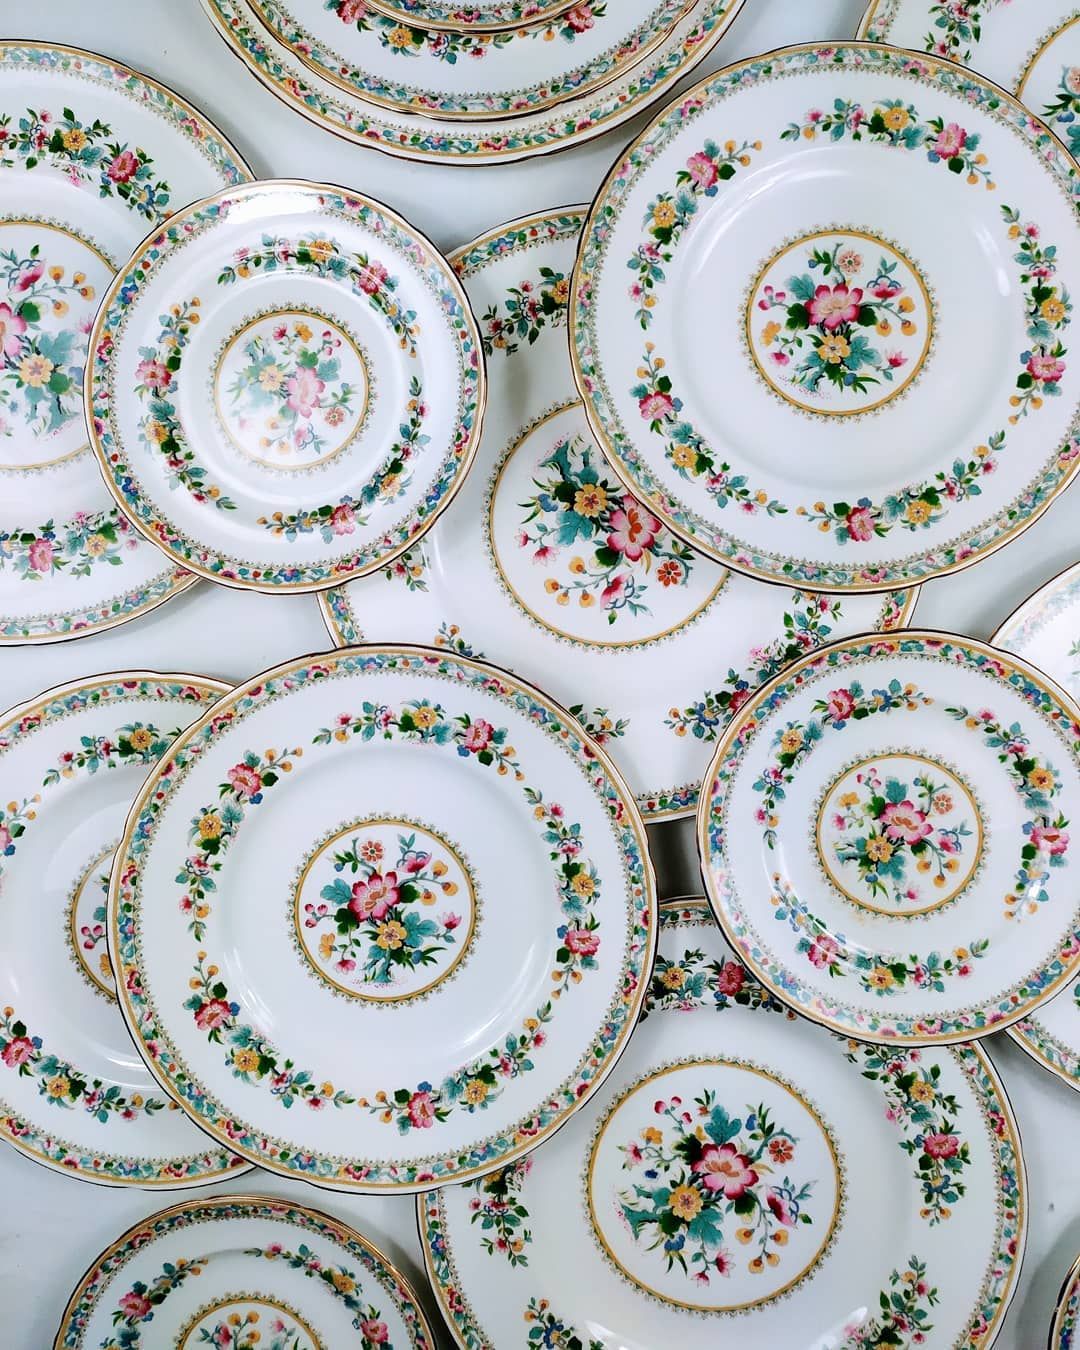 English Floral Tableware and Vintage Tea Sets via @la.stanza.segreta